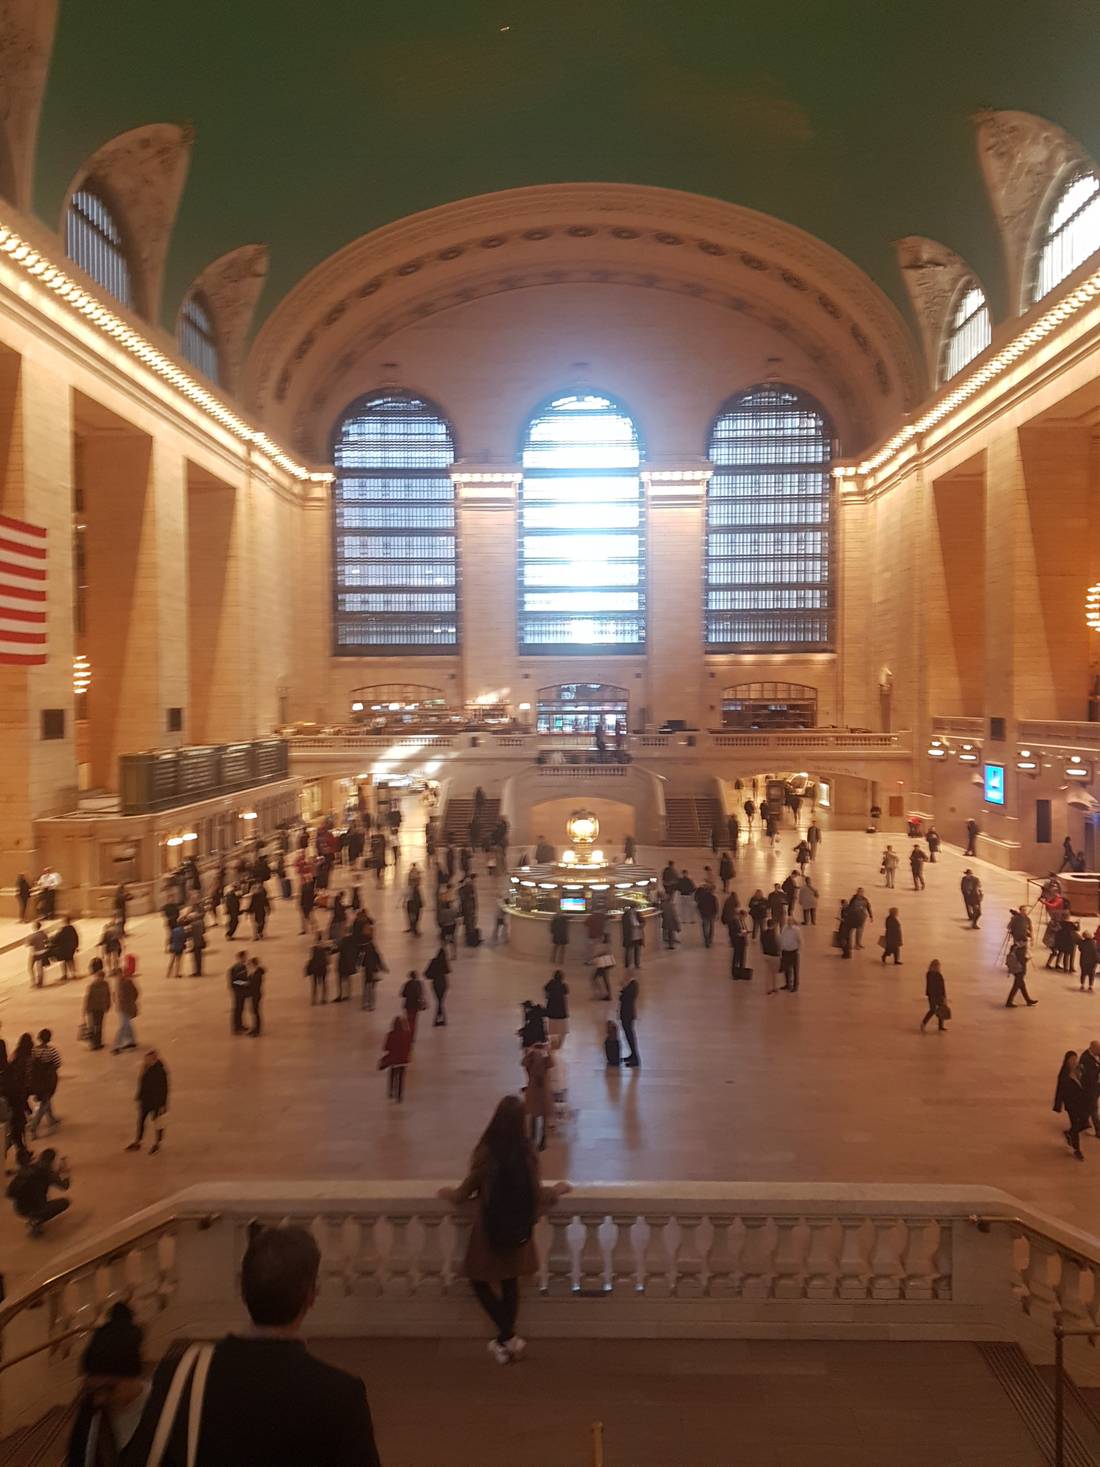 Grand Central Station. Very impressive.